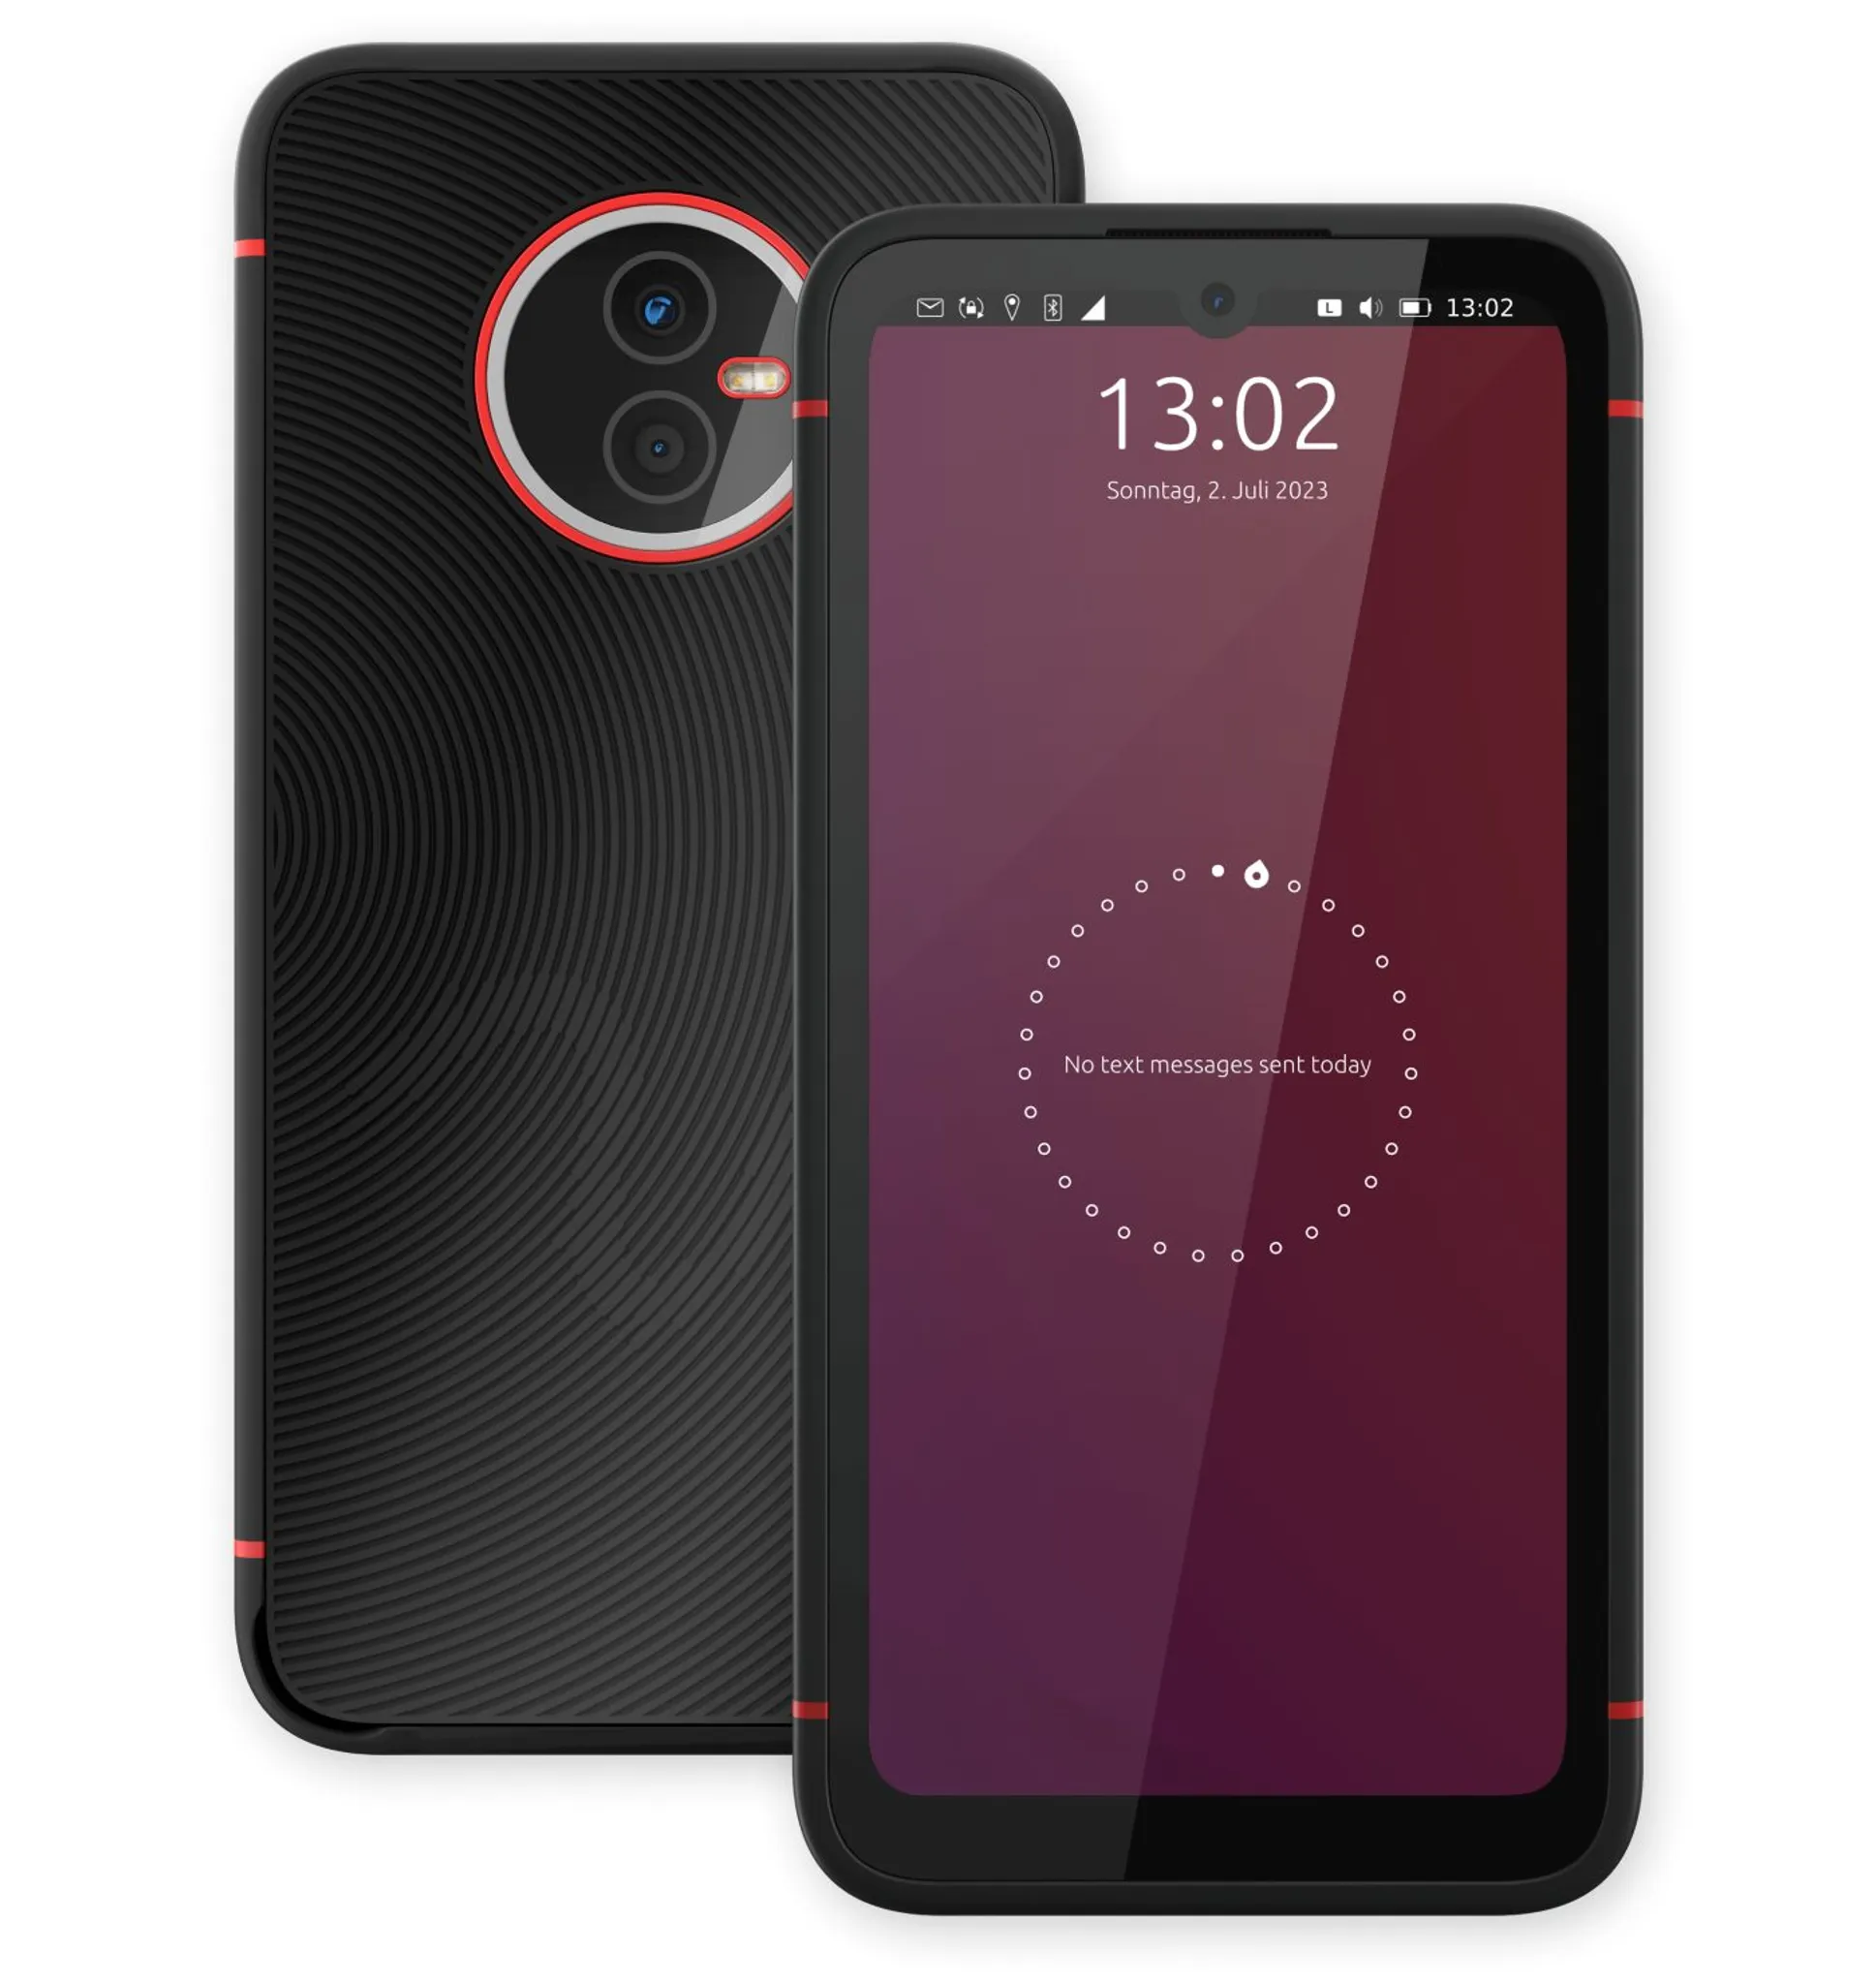 mit Smartphone – Phone X23 Volla Touch Ubuntu